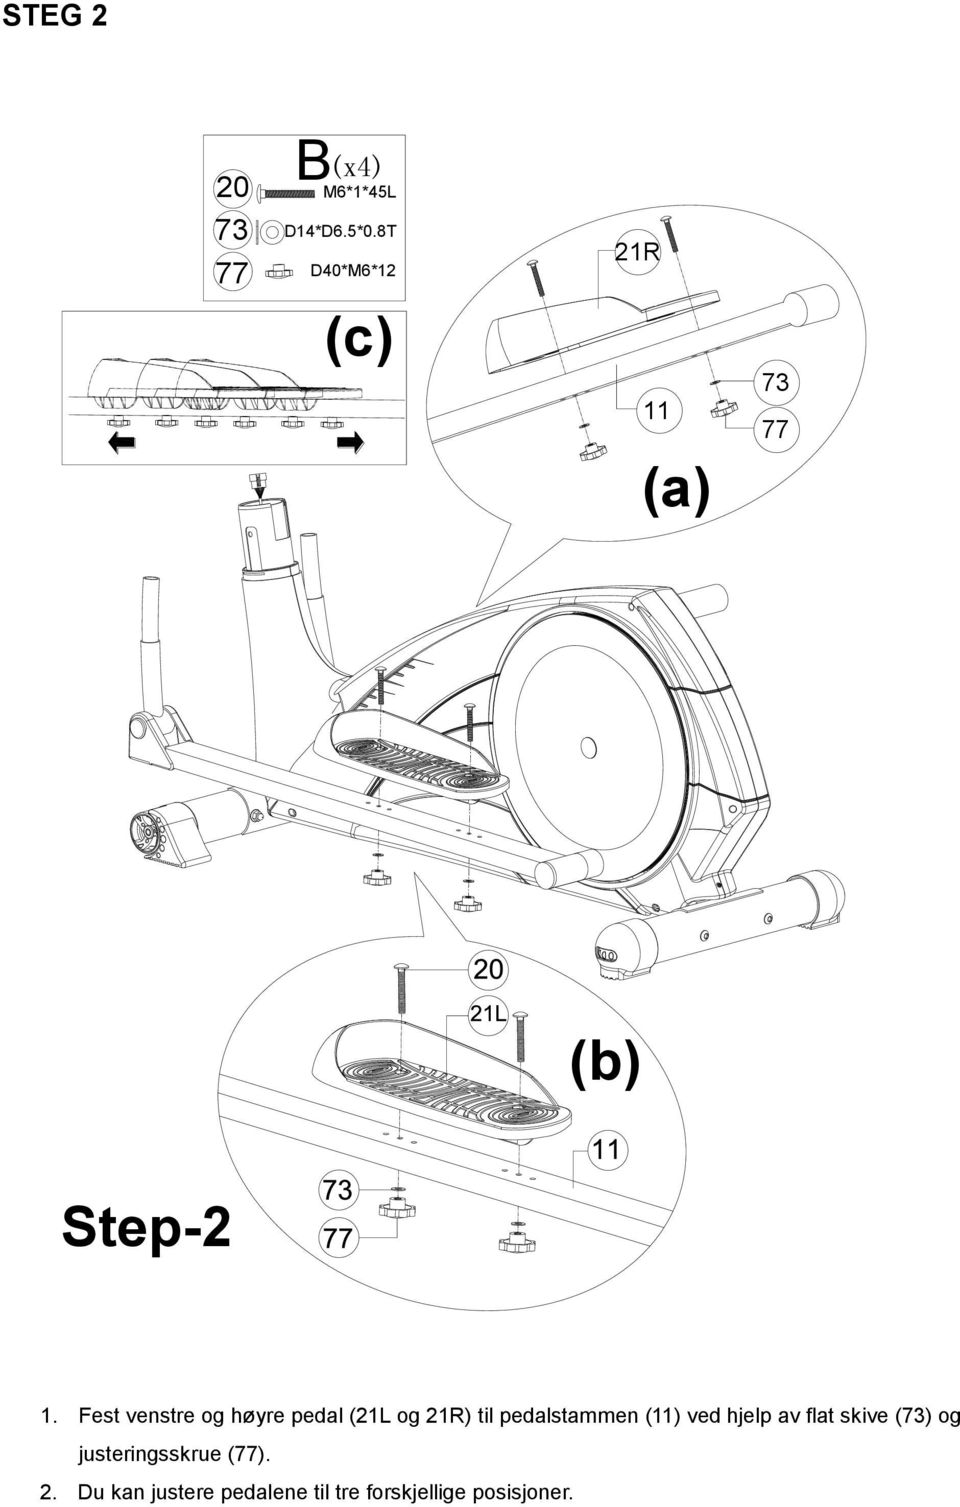 Fest venstre og høyre pedal (21L og 21R) til pedalstammen (11)